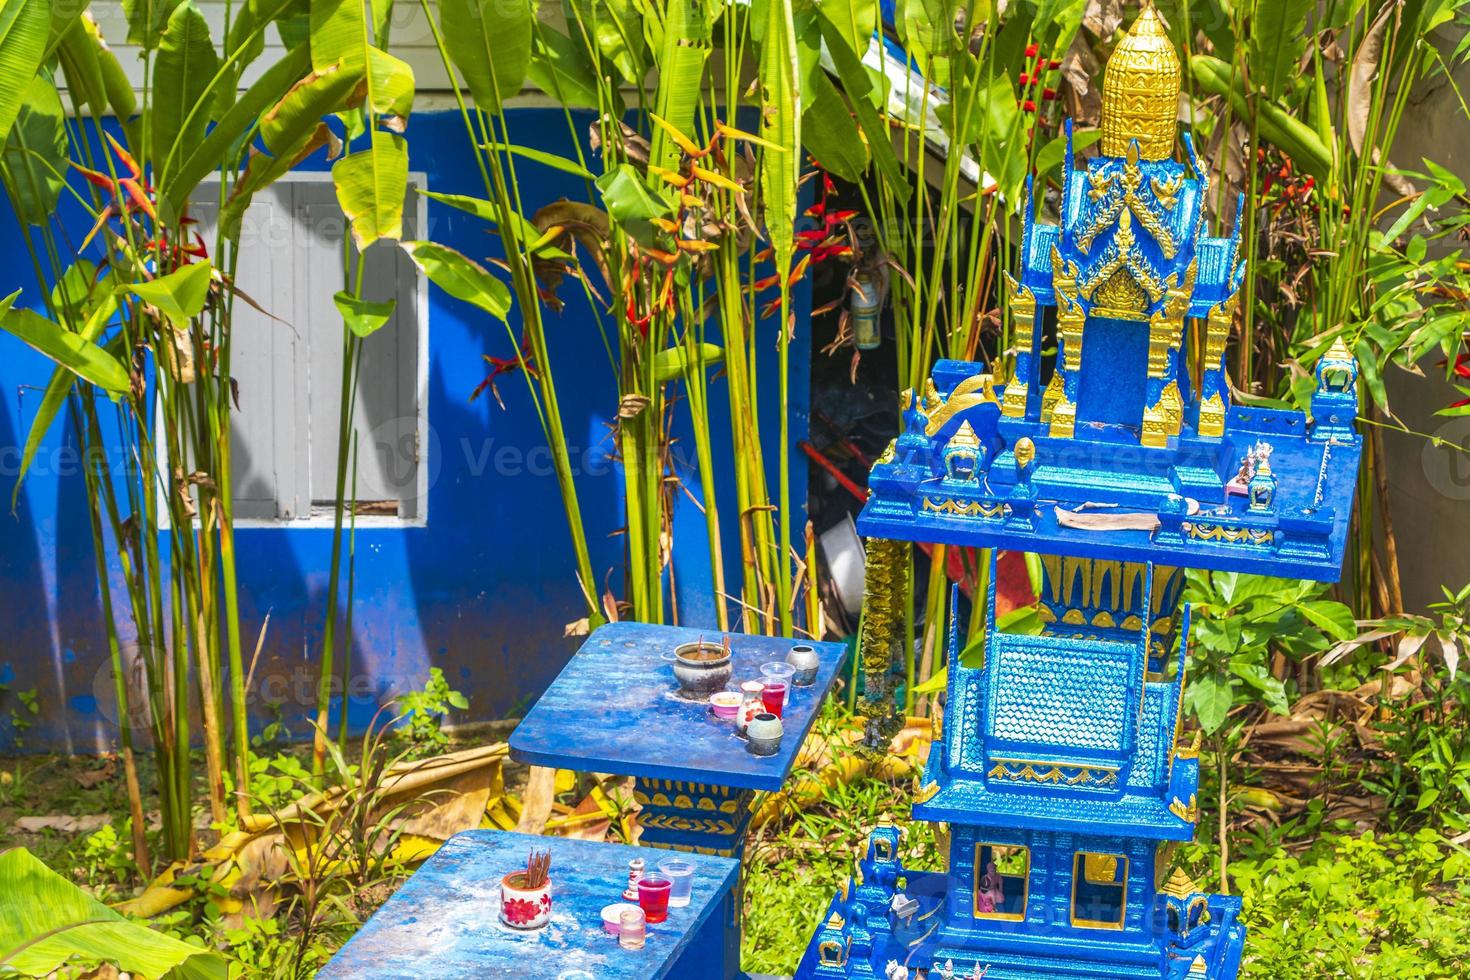 Holy ghost house shrine small temple garden yard village Thailand. photo